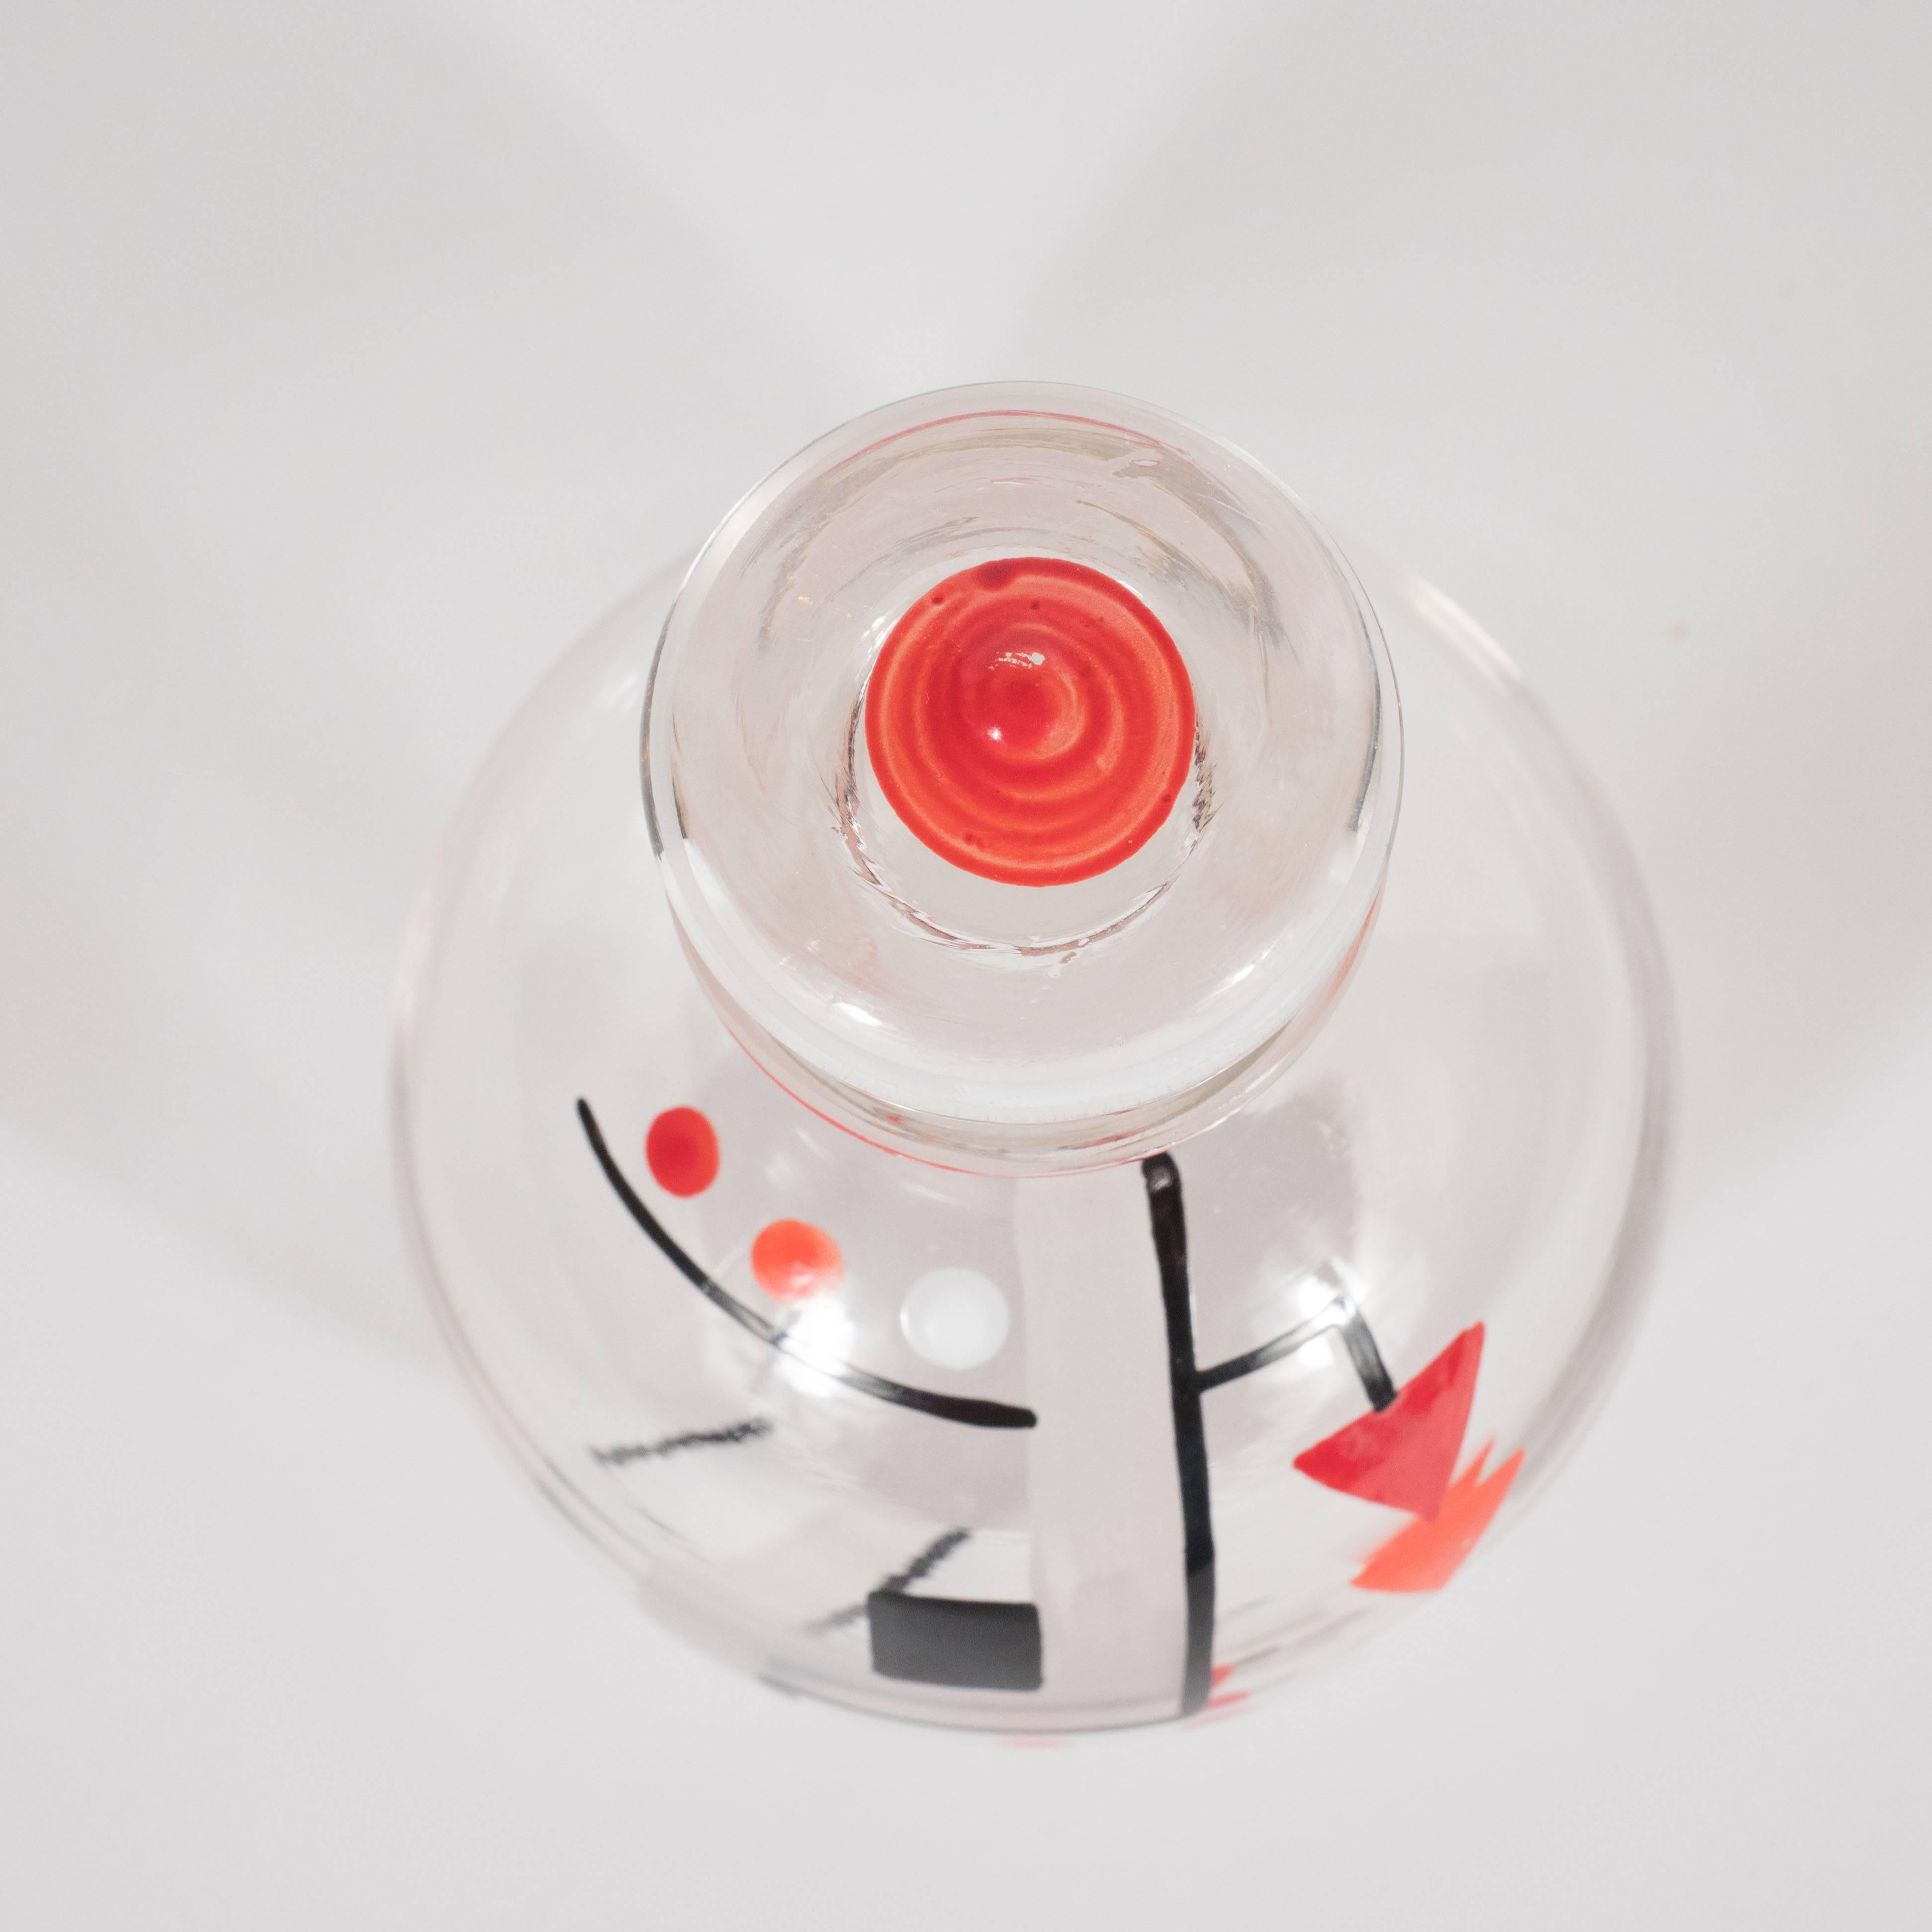 Czech Art Deco Perfume Bottle with Hand-Painted Constructivist Geometric Forms